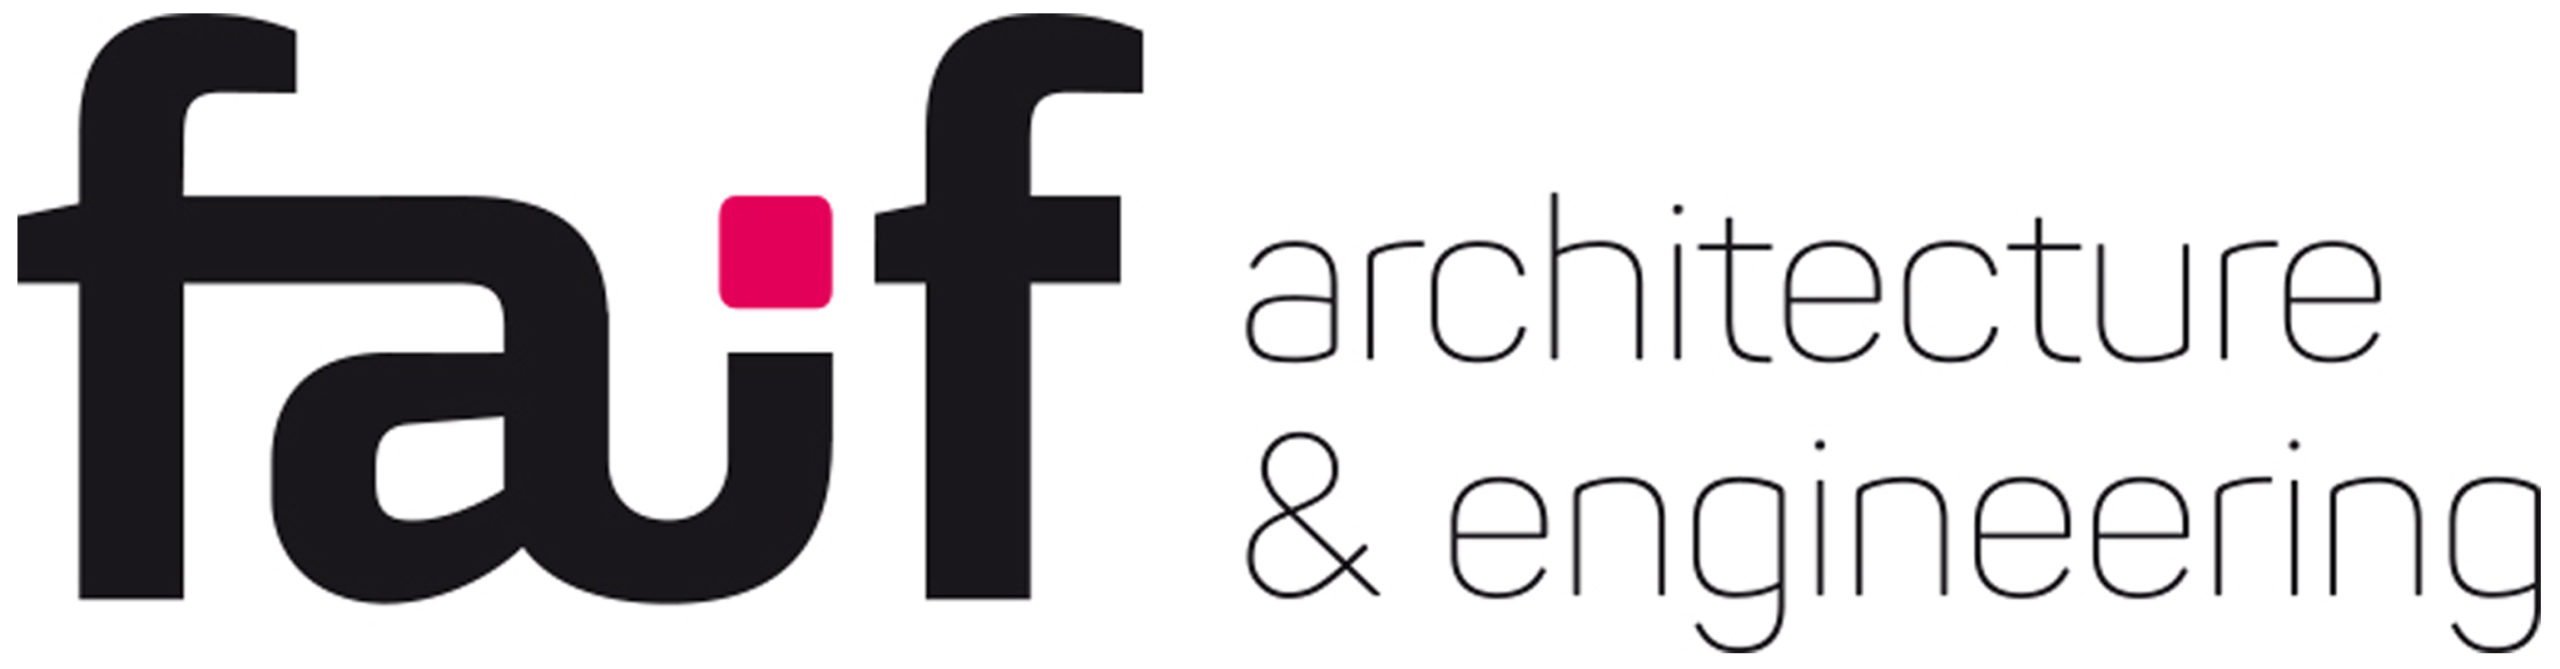 Faif - architecture & engineering